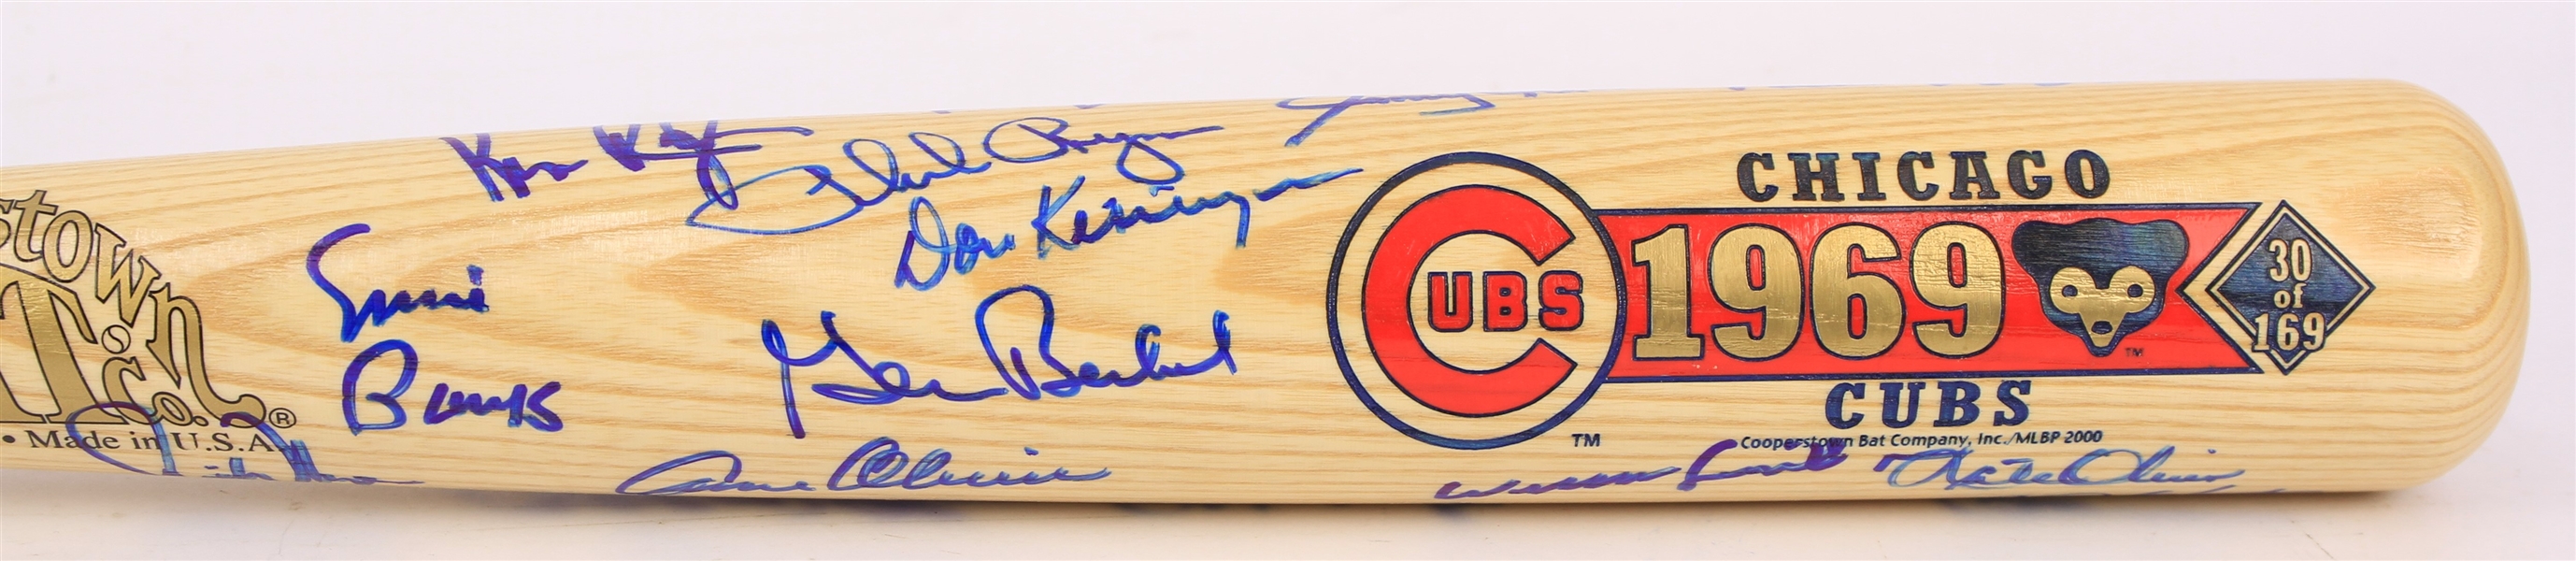 1969 Chicago Cubs Multi Signed Cooperstown Bat CO. Bat w/ 19 Signatures Including Ernie Banks, Ron Santo, Fergie Jenkins & More (JSA)